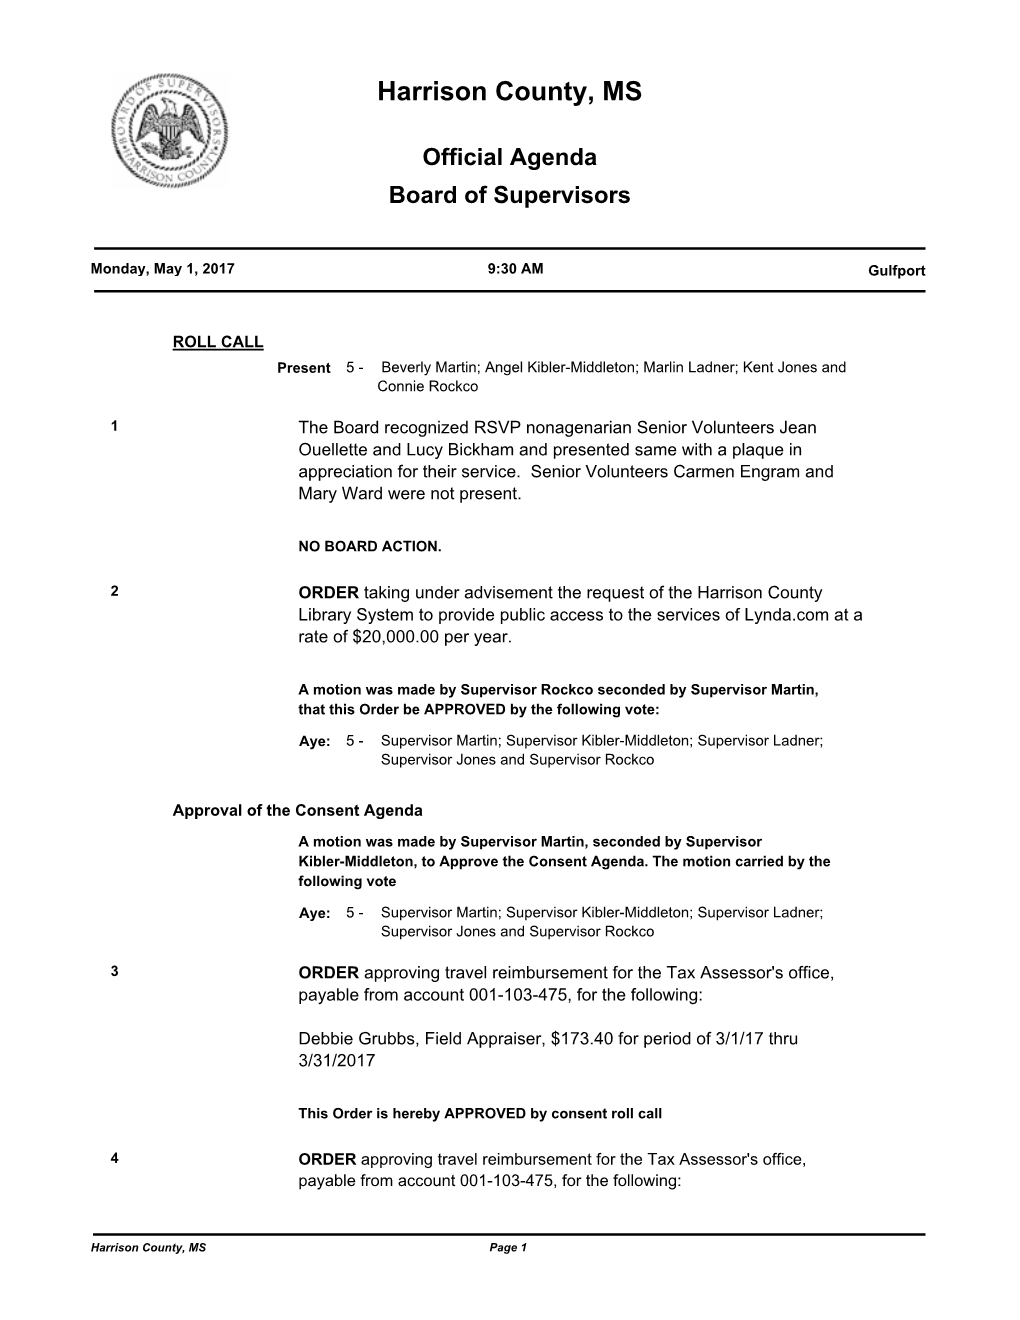 Official Agenda Board of Supervisors